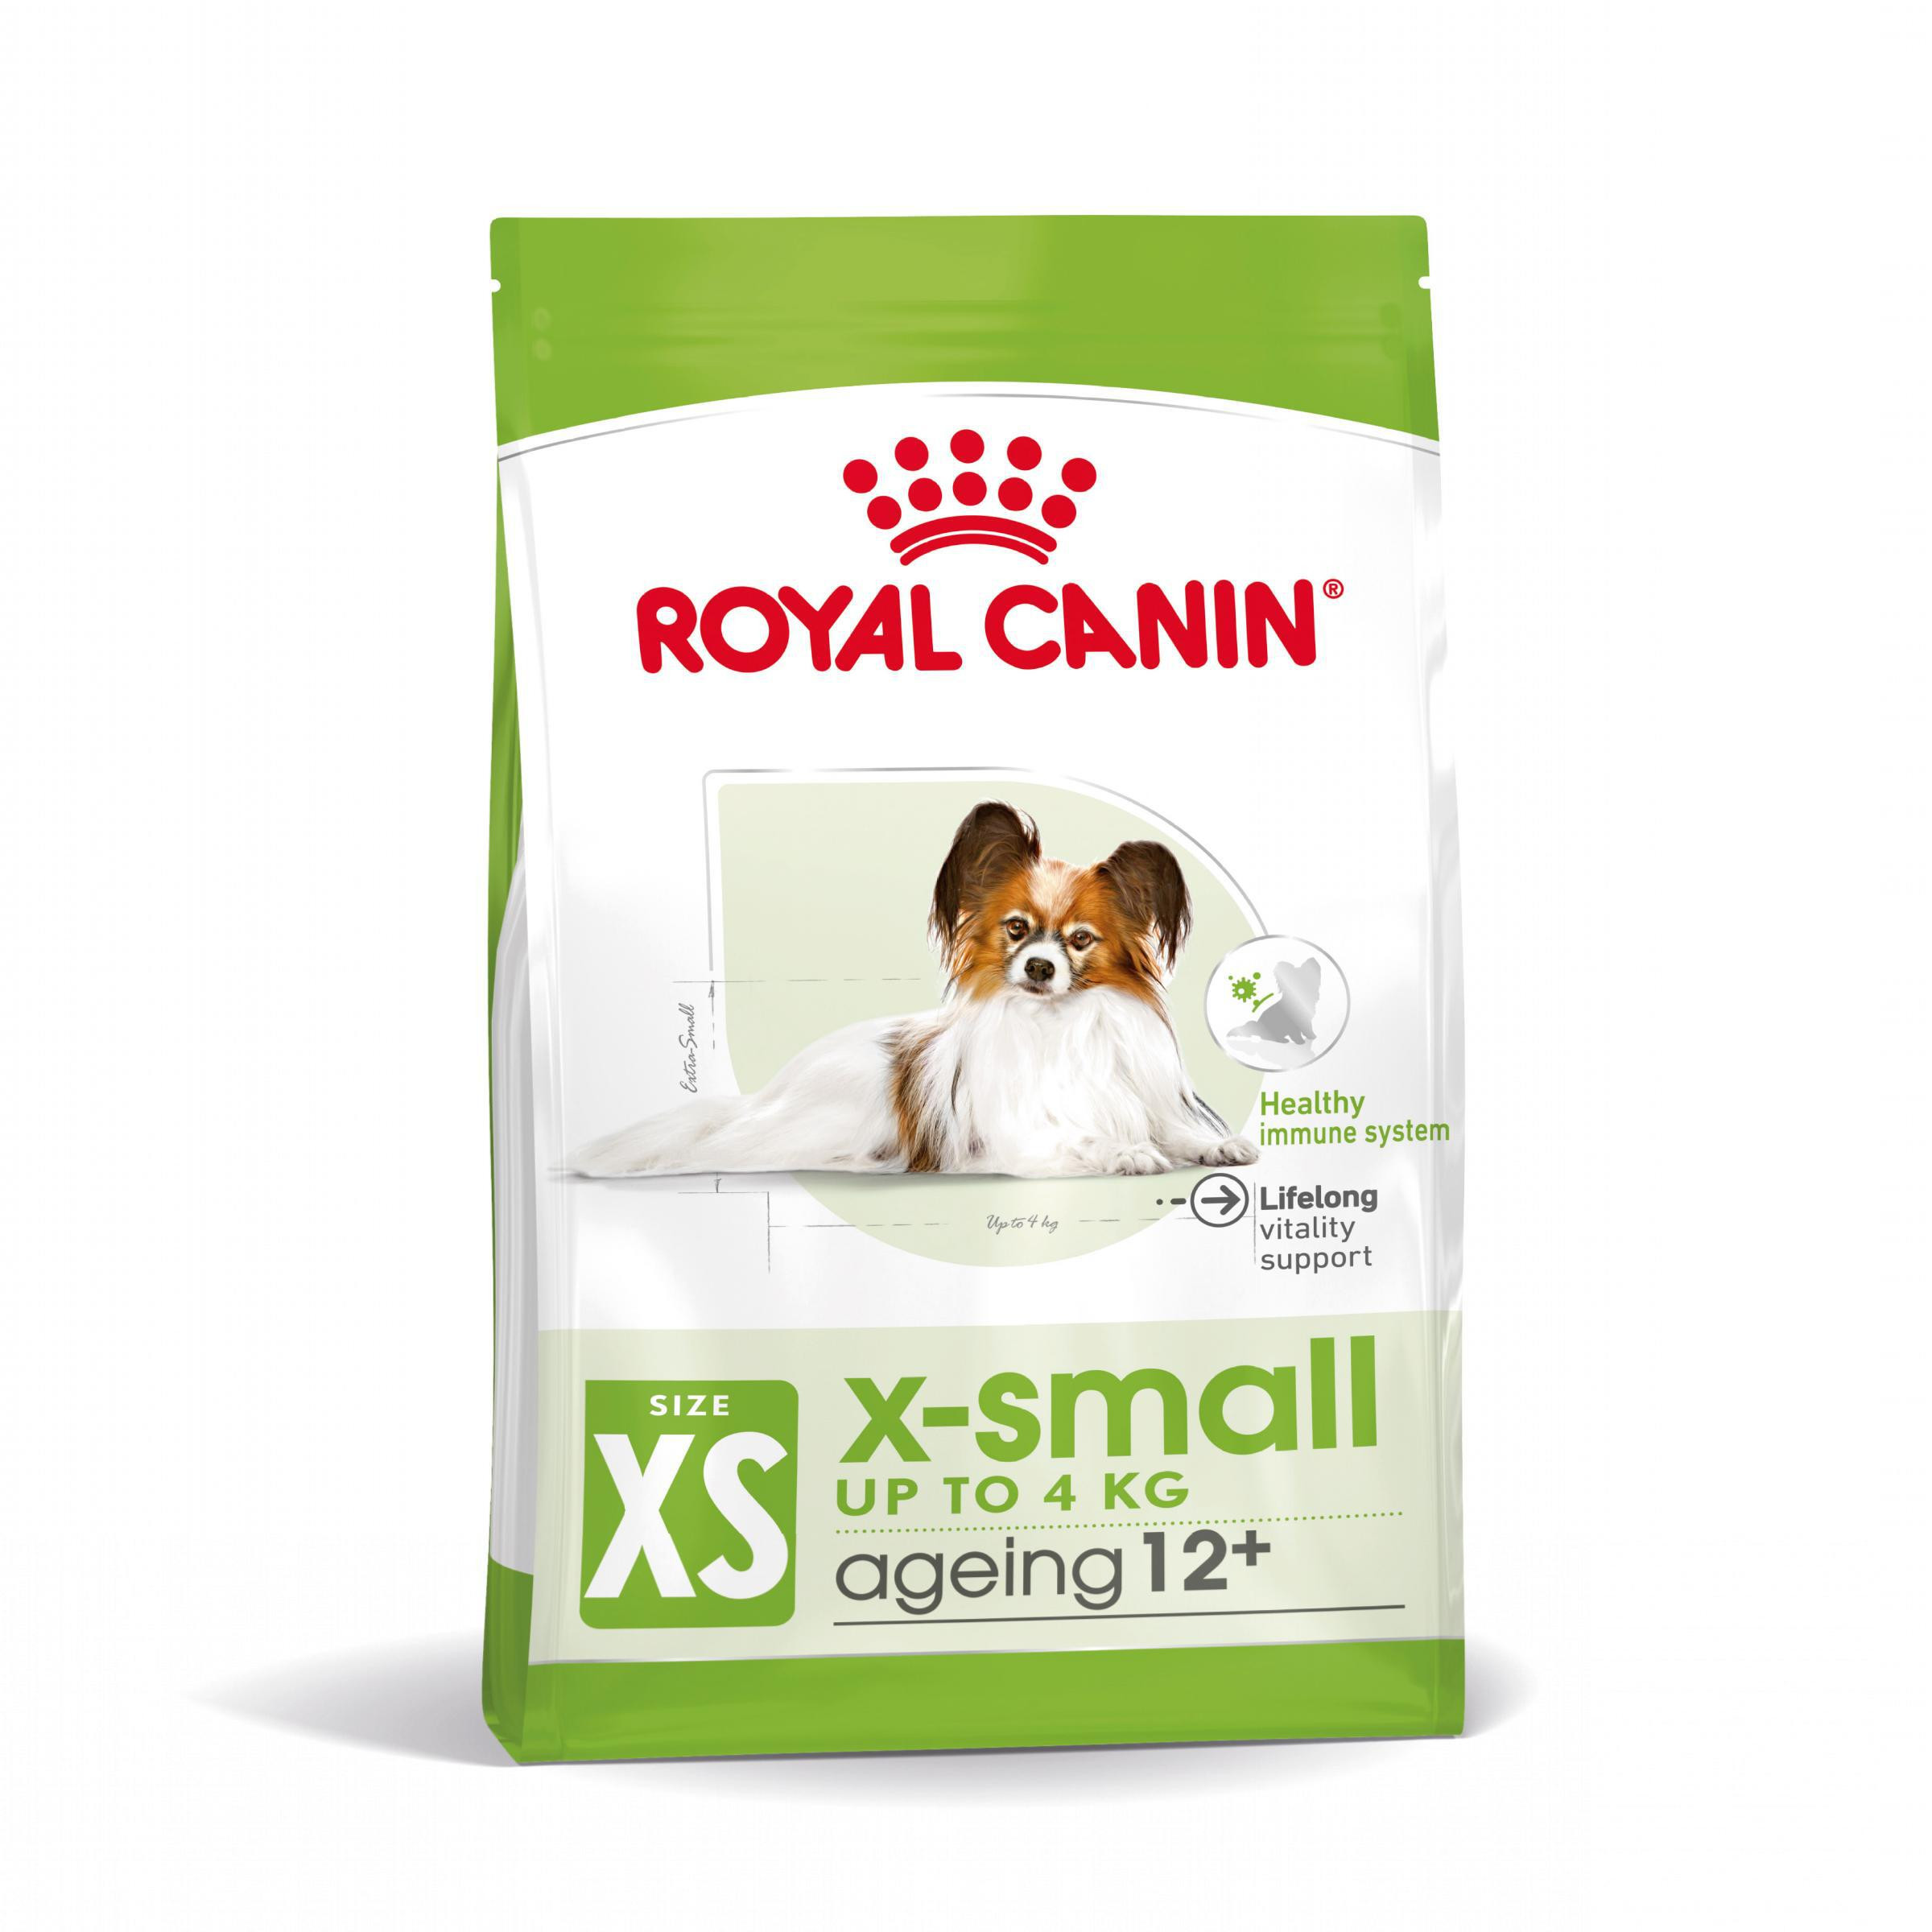 Bild von 2 x 1,5 kg Royal Canin X-Small Ageing 12+ Hundefutter